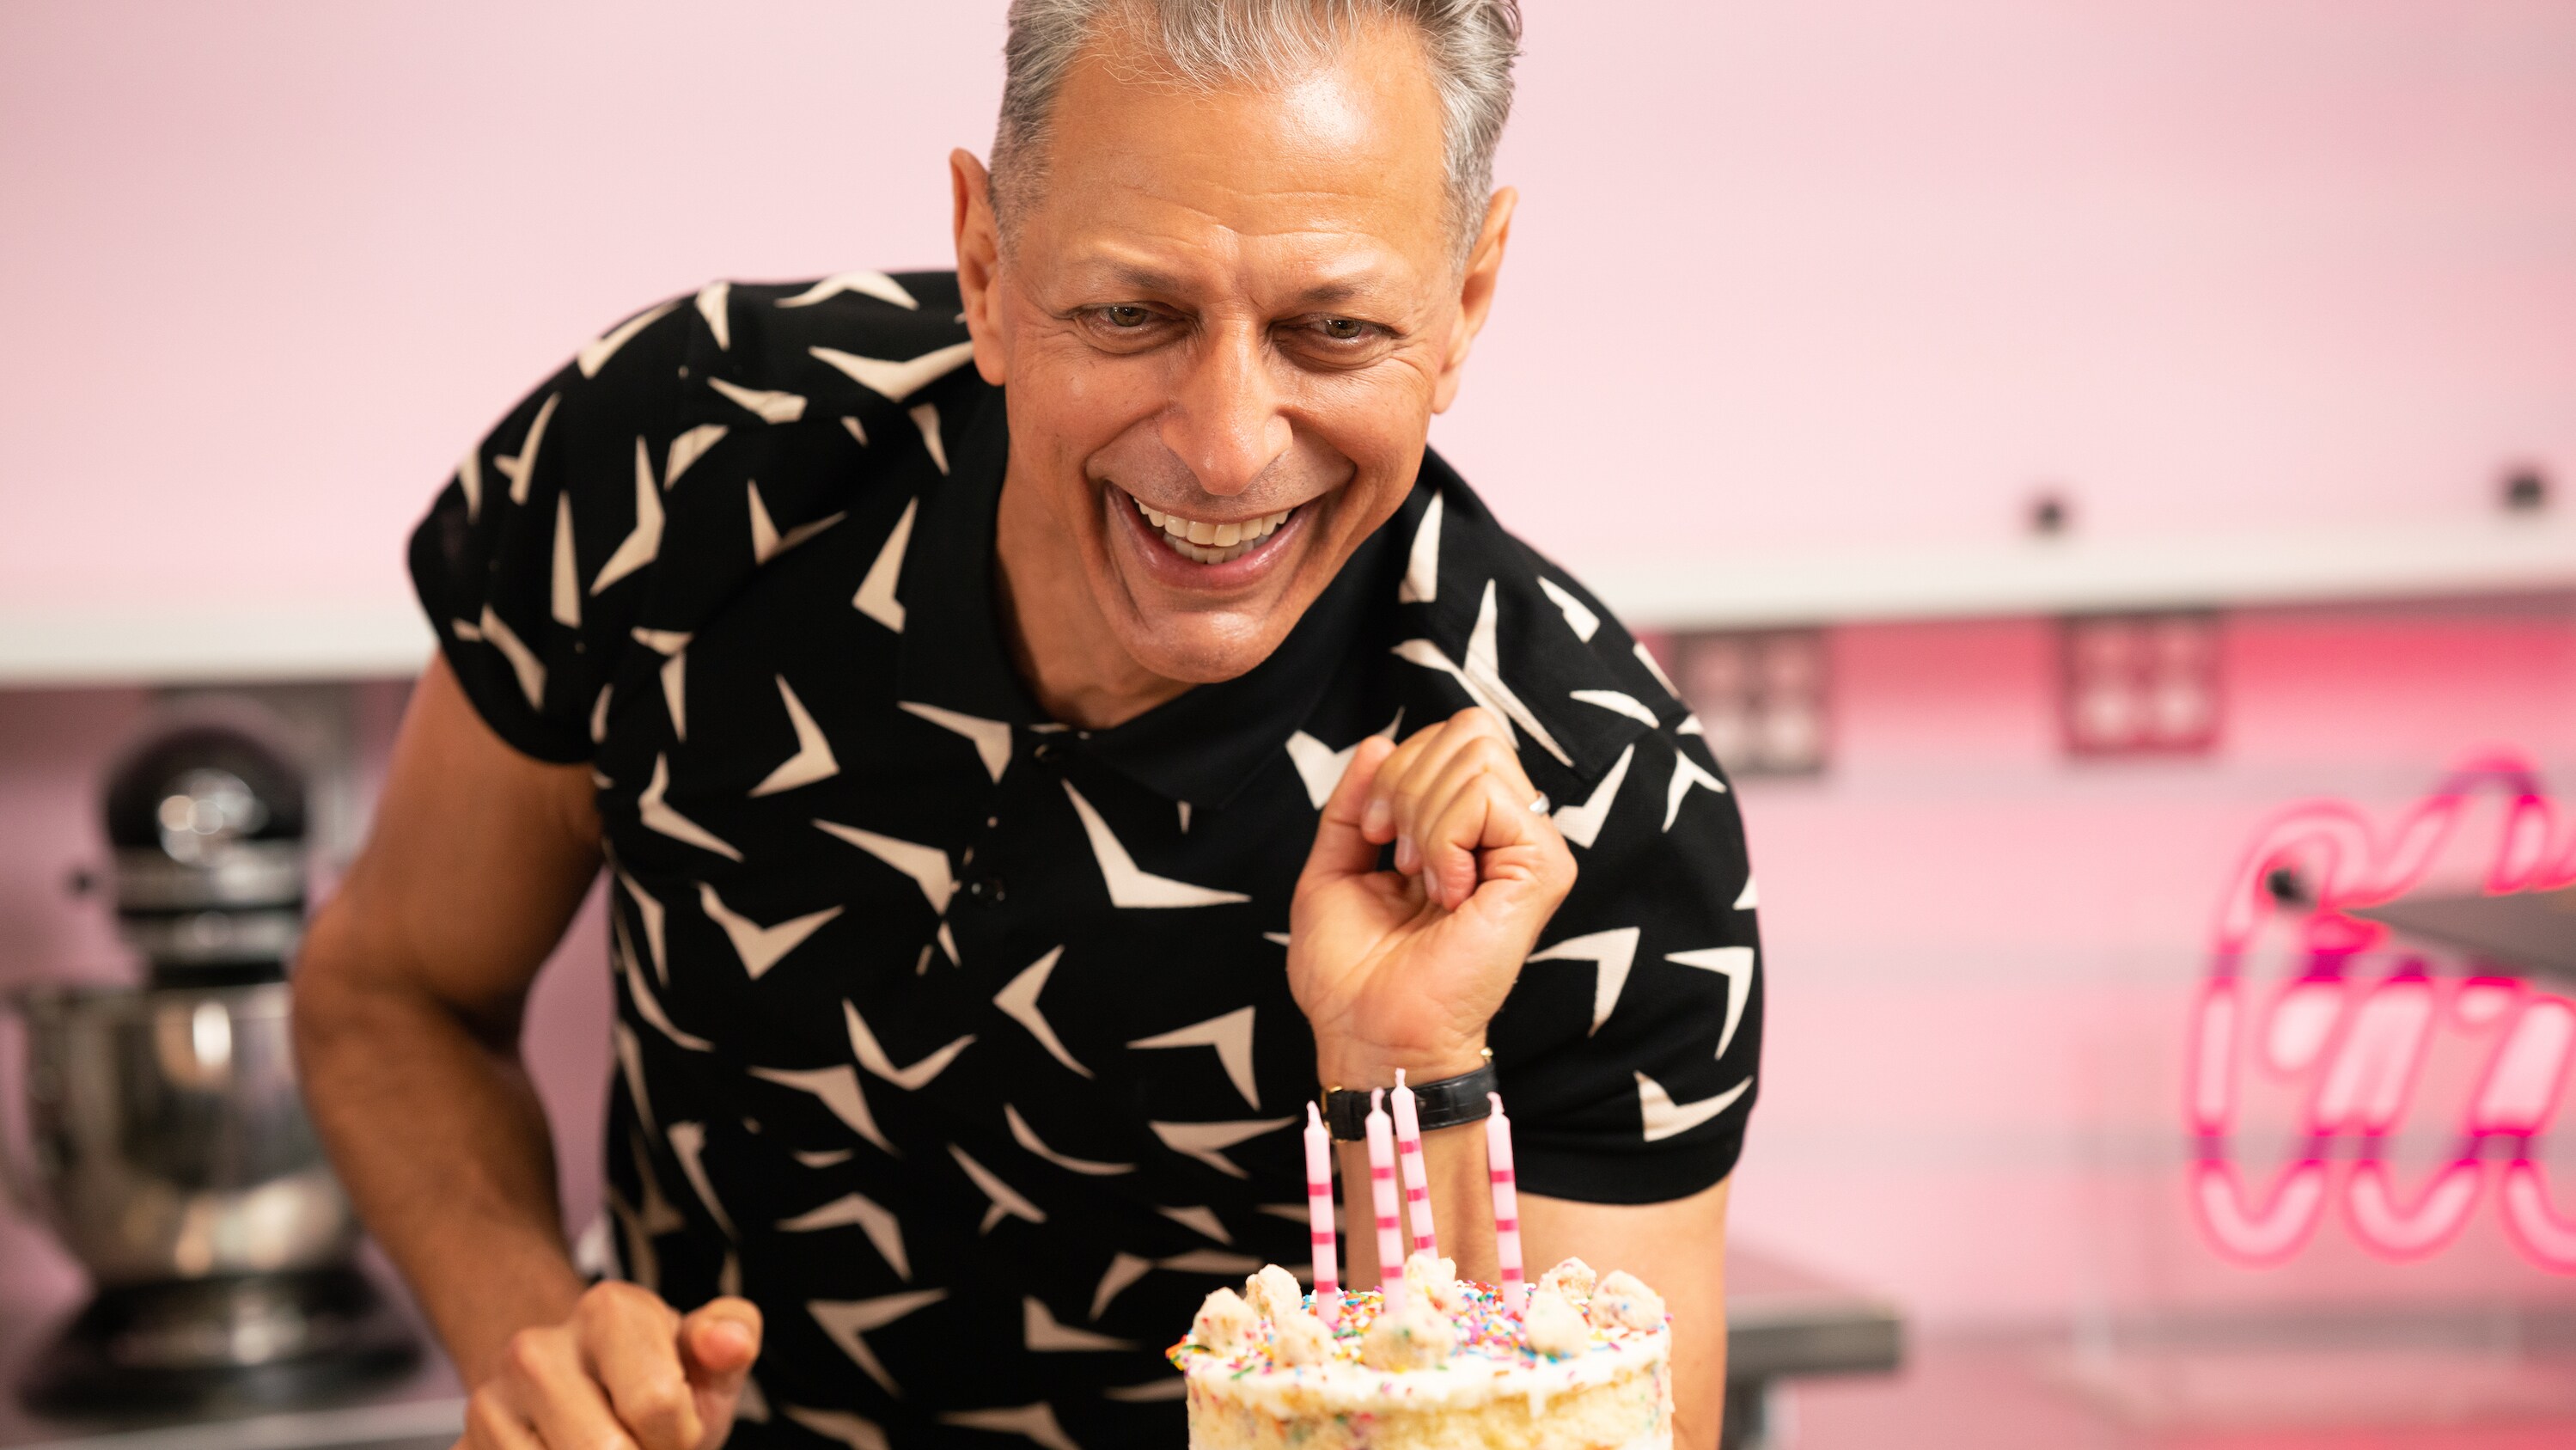 Los Angeles, CA - Jeff Goldblum with birthday cake. (Credit: National Geographic)